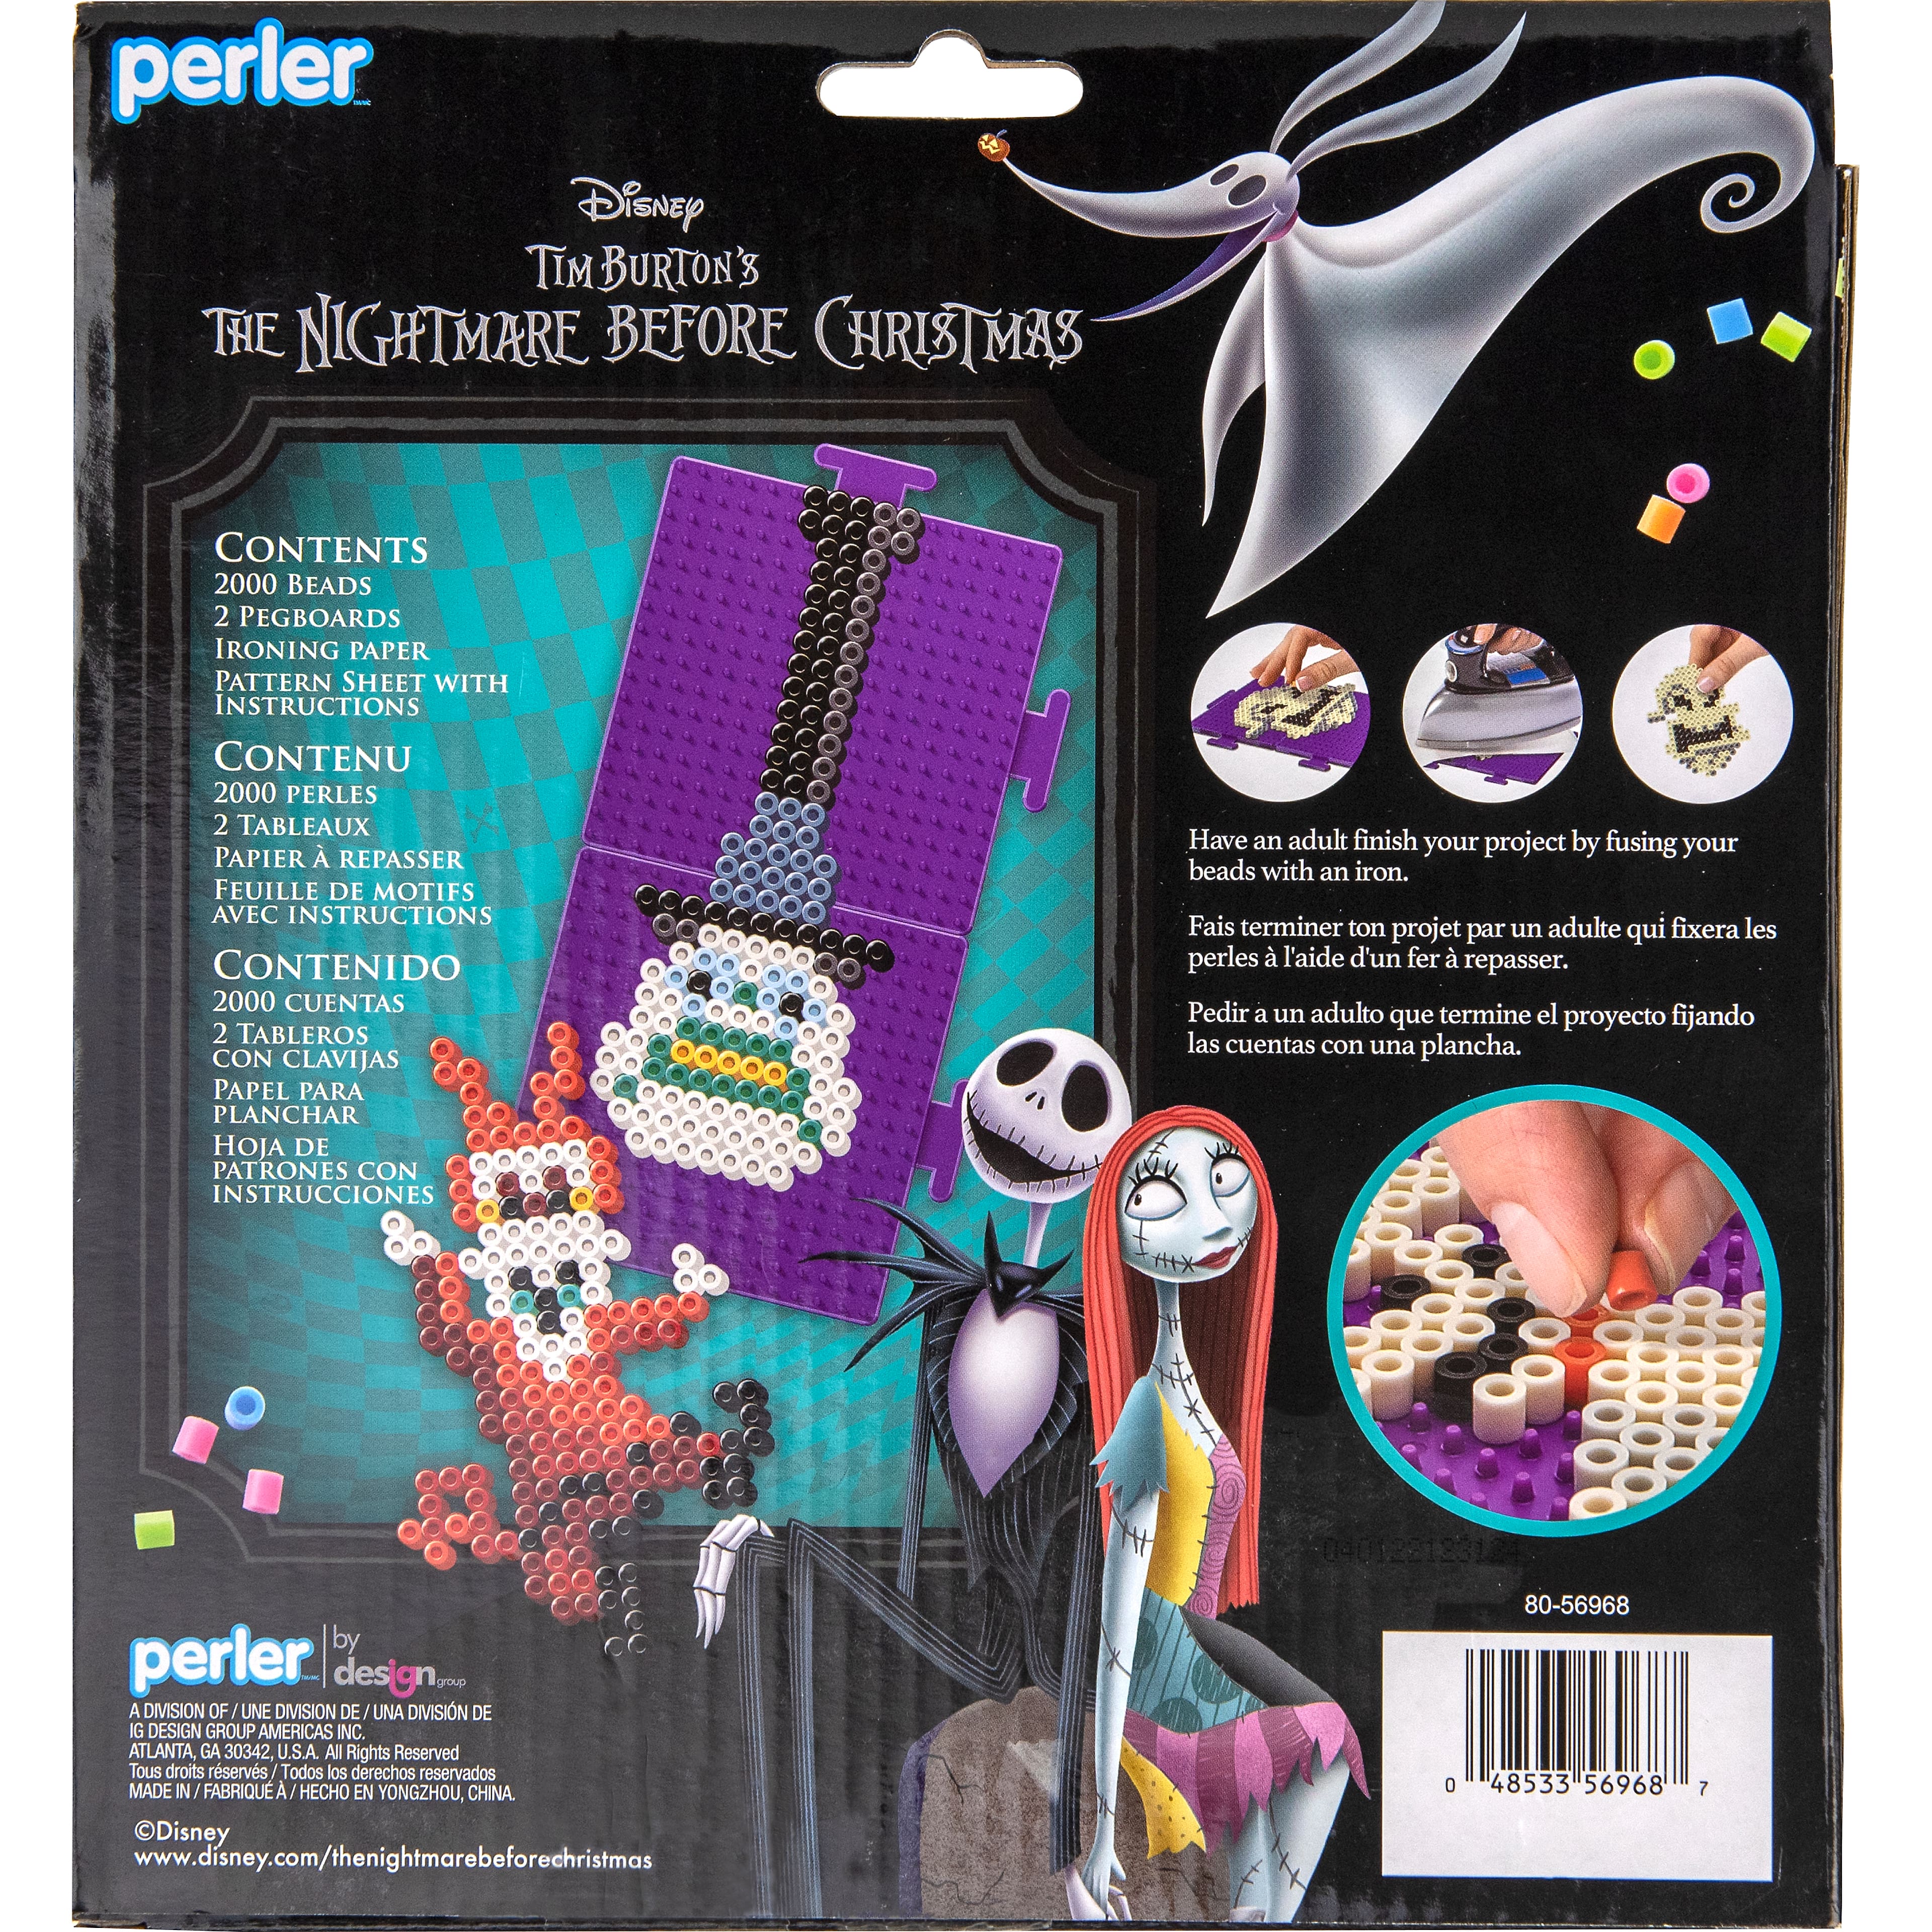 12 Pack: Perler&#x2122; The Nightmare Before Christmas Fused Bead Kit